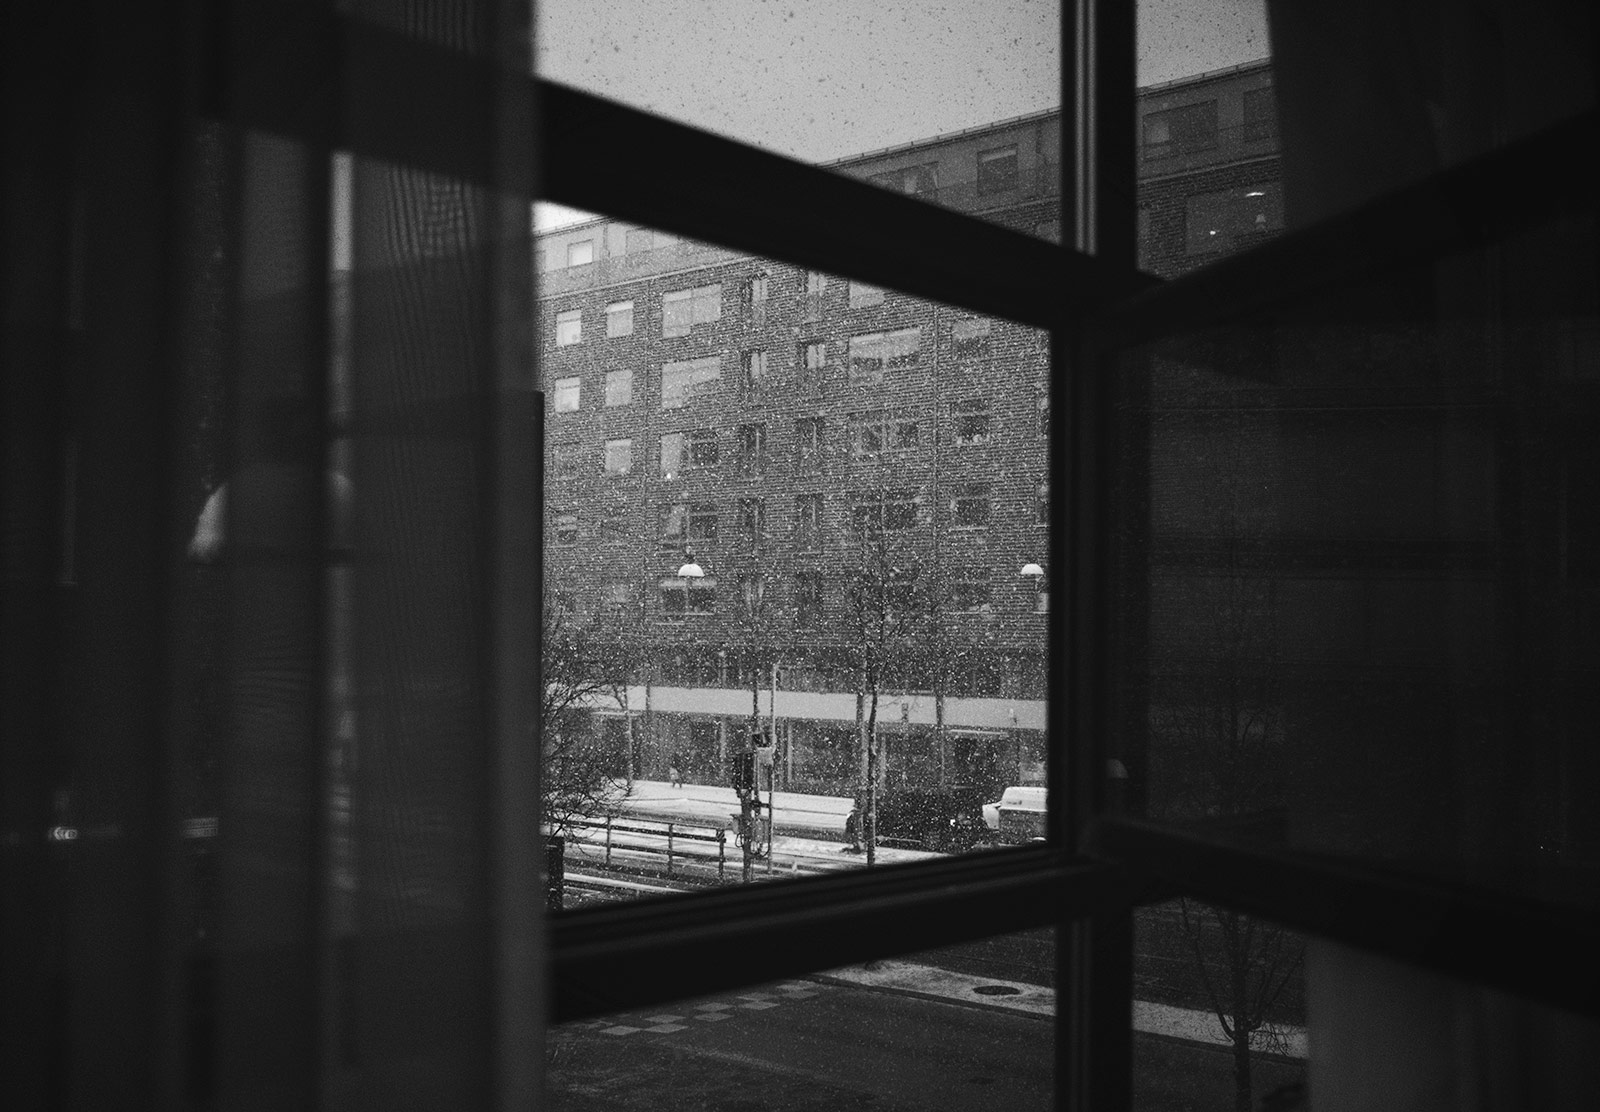 Snow through window